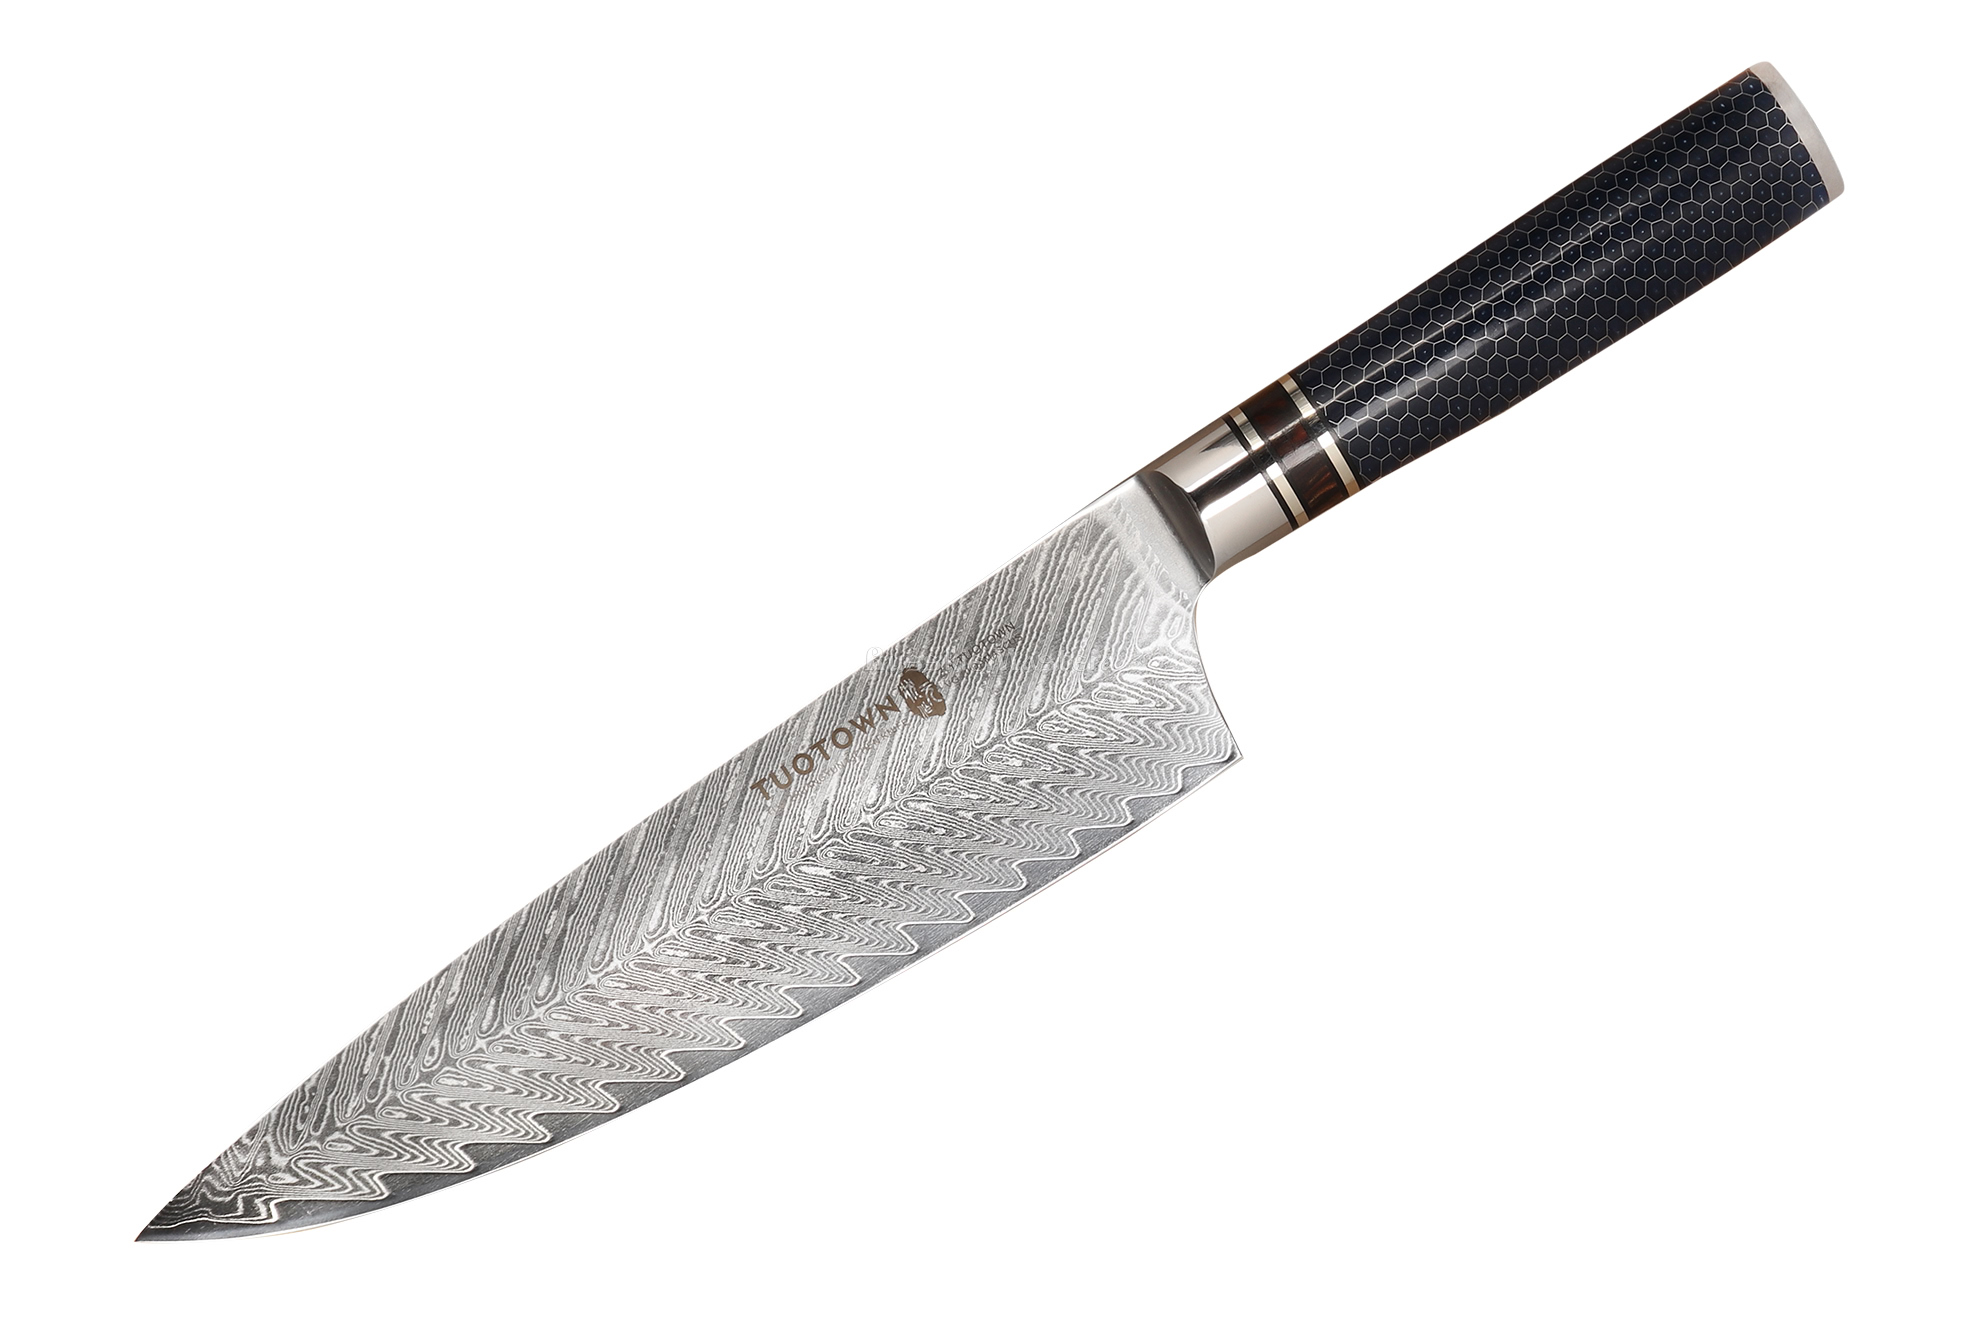 Шеф-нож азиатского типа (японский нож Гюйто) TUOTOWN CH200 SG-005, VG10 дамаск, рукоять композит соты, 20 см.